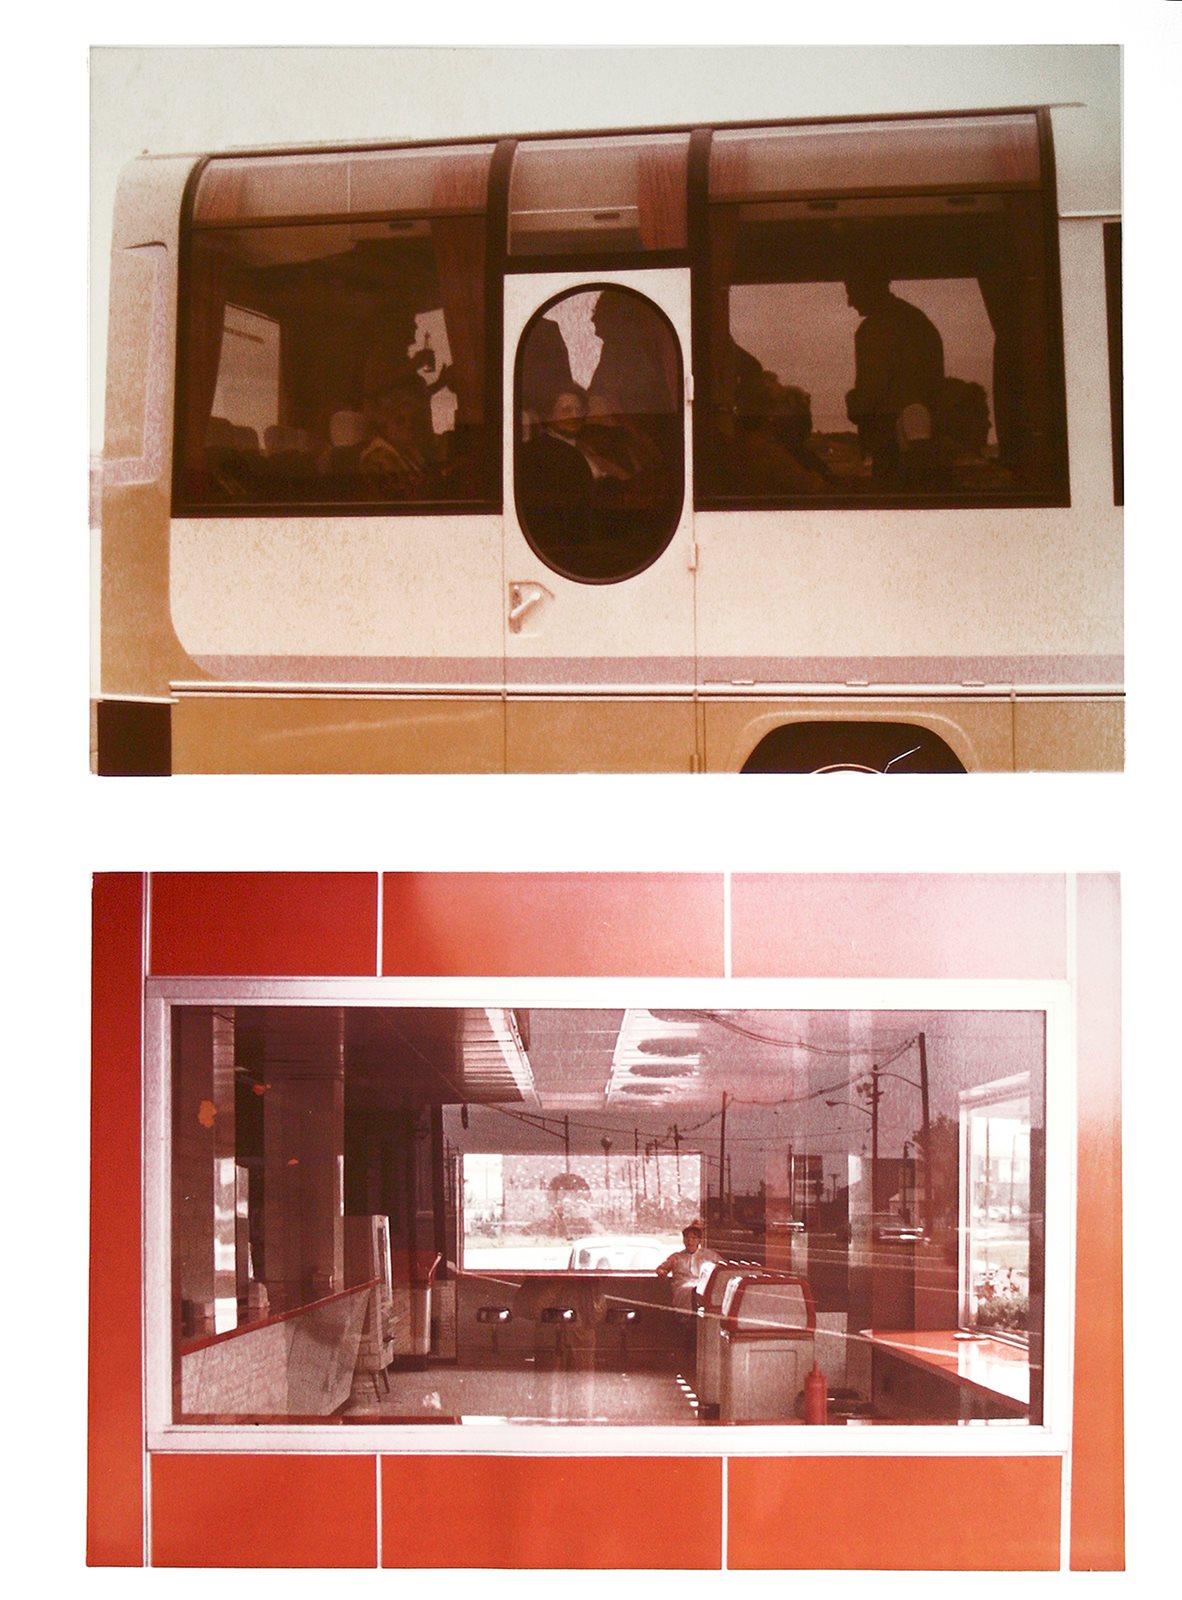 [top] Tourist-bus Portugal, 1980 ; [bottom] New Highway Restaurant in New Housing Development, Jersey City, N.Y.